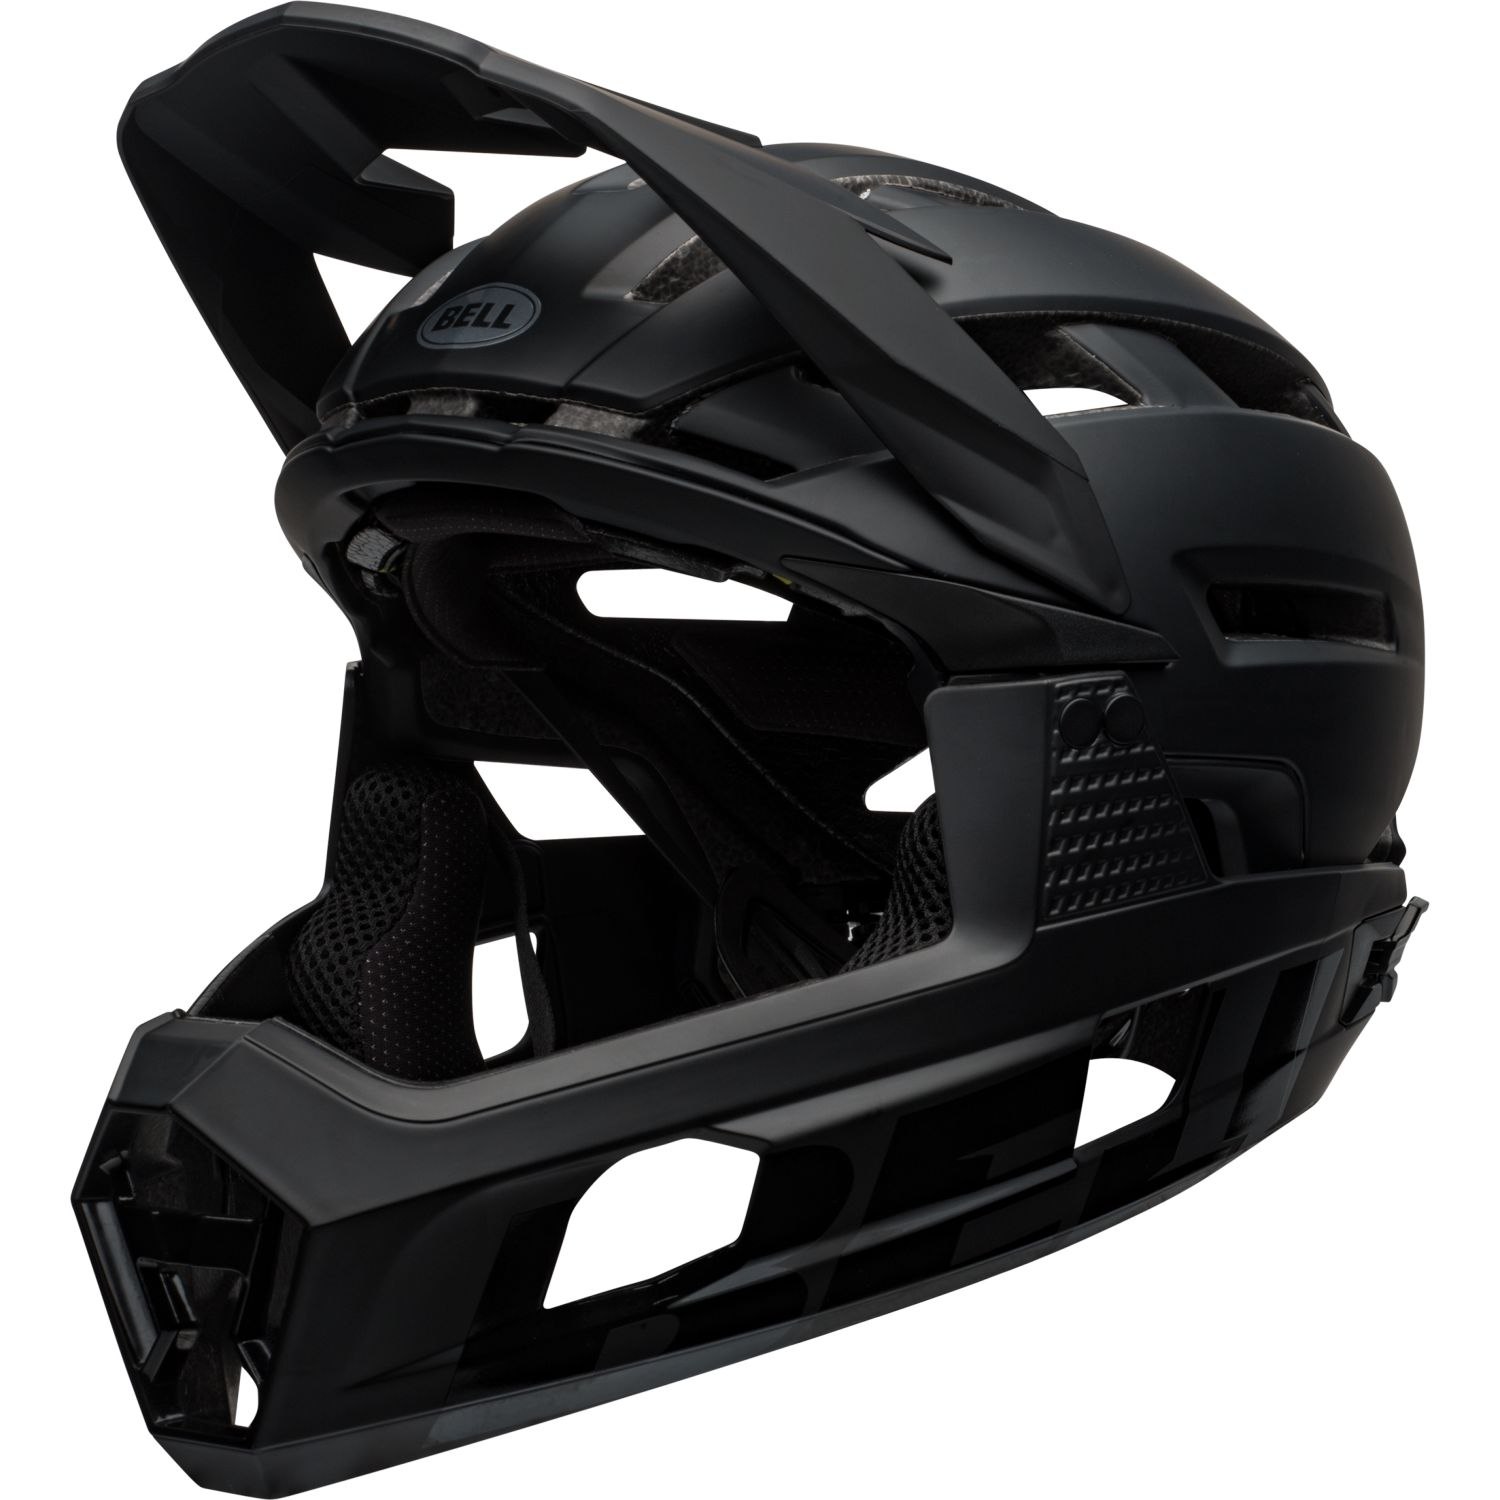 Produktbild von Bell Super Air R Spherical Helm - matte/gloss black